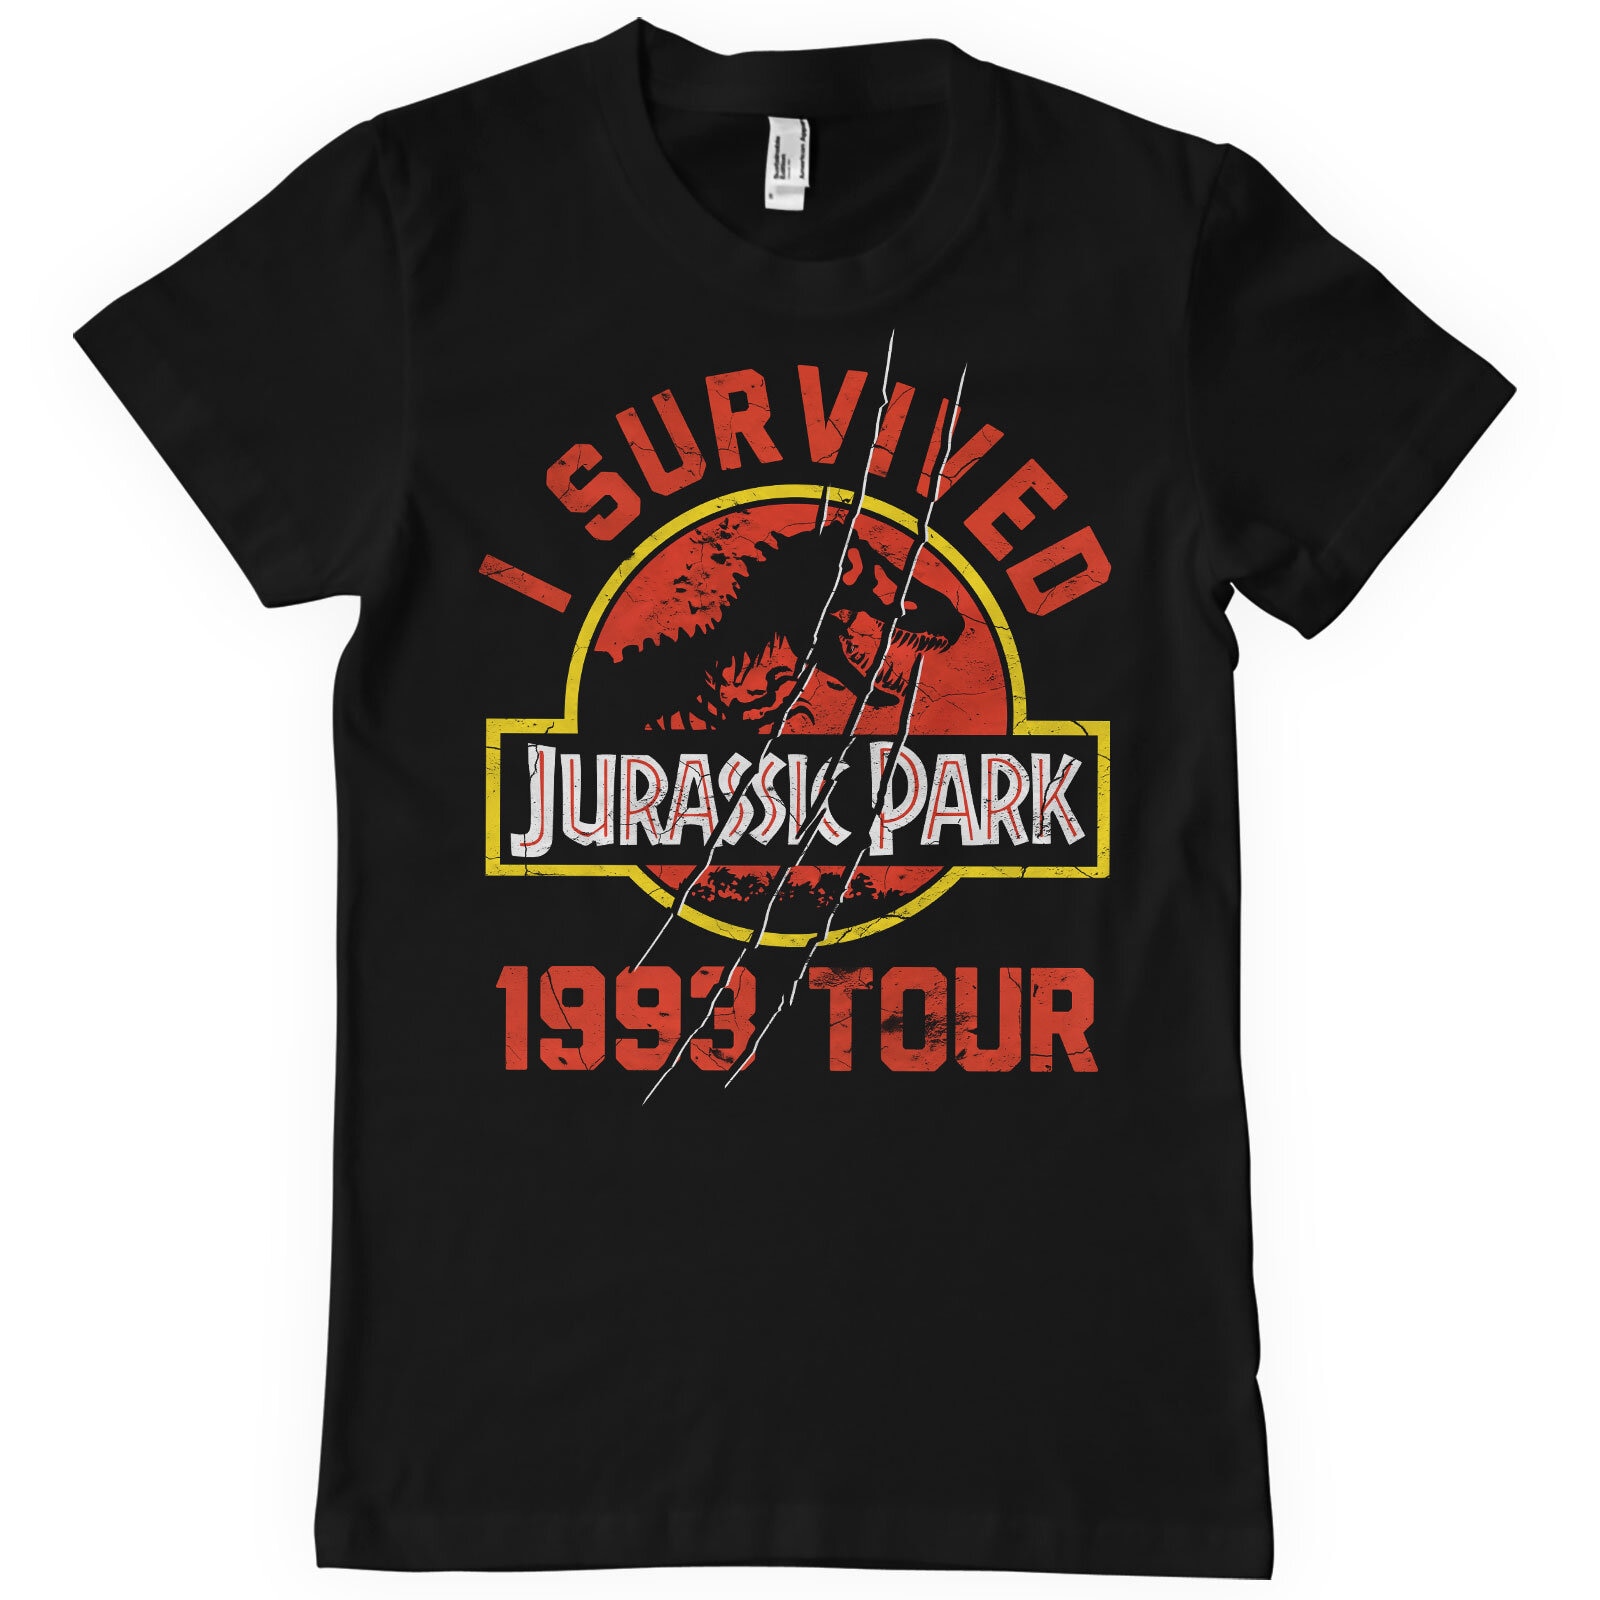 Jurassic Park 1993 Tour T-Shirt